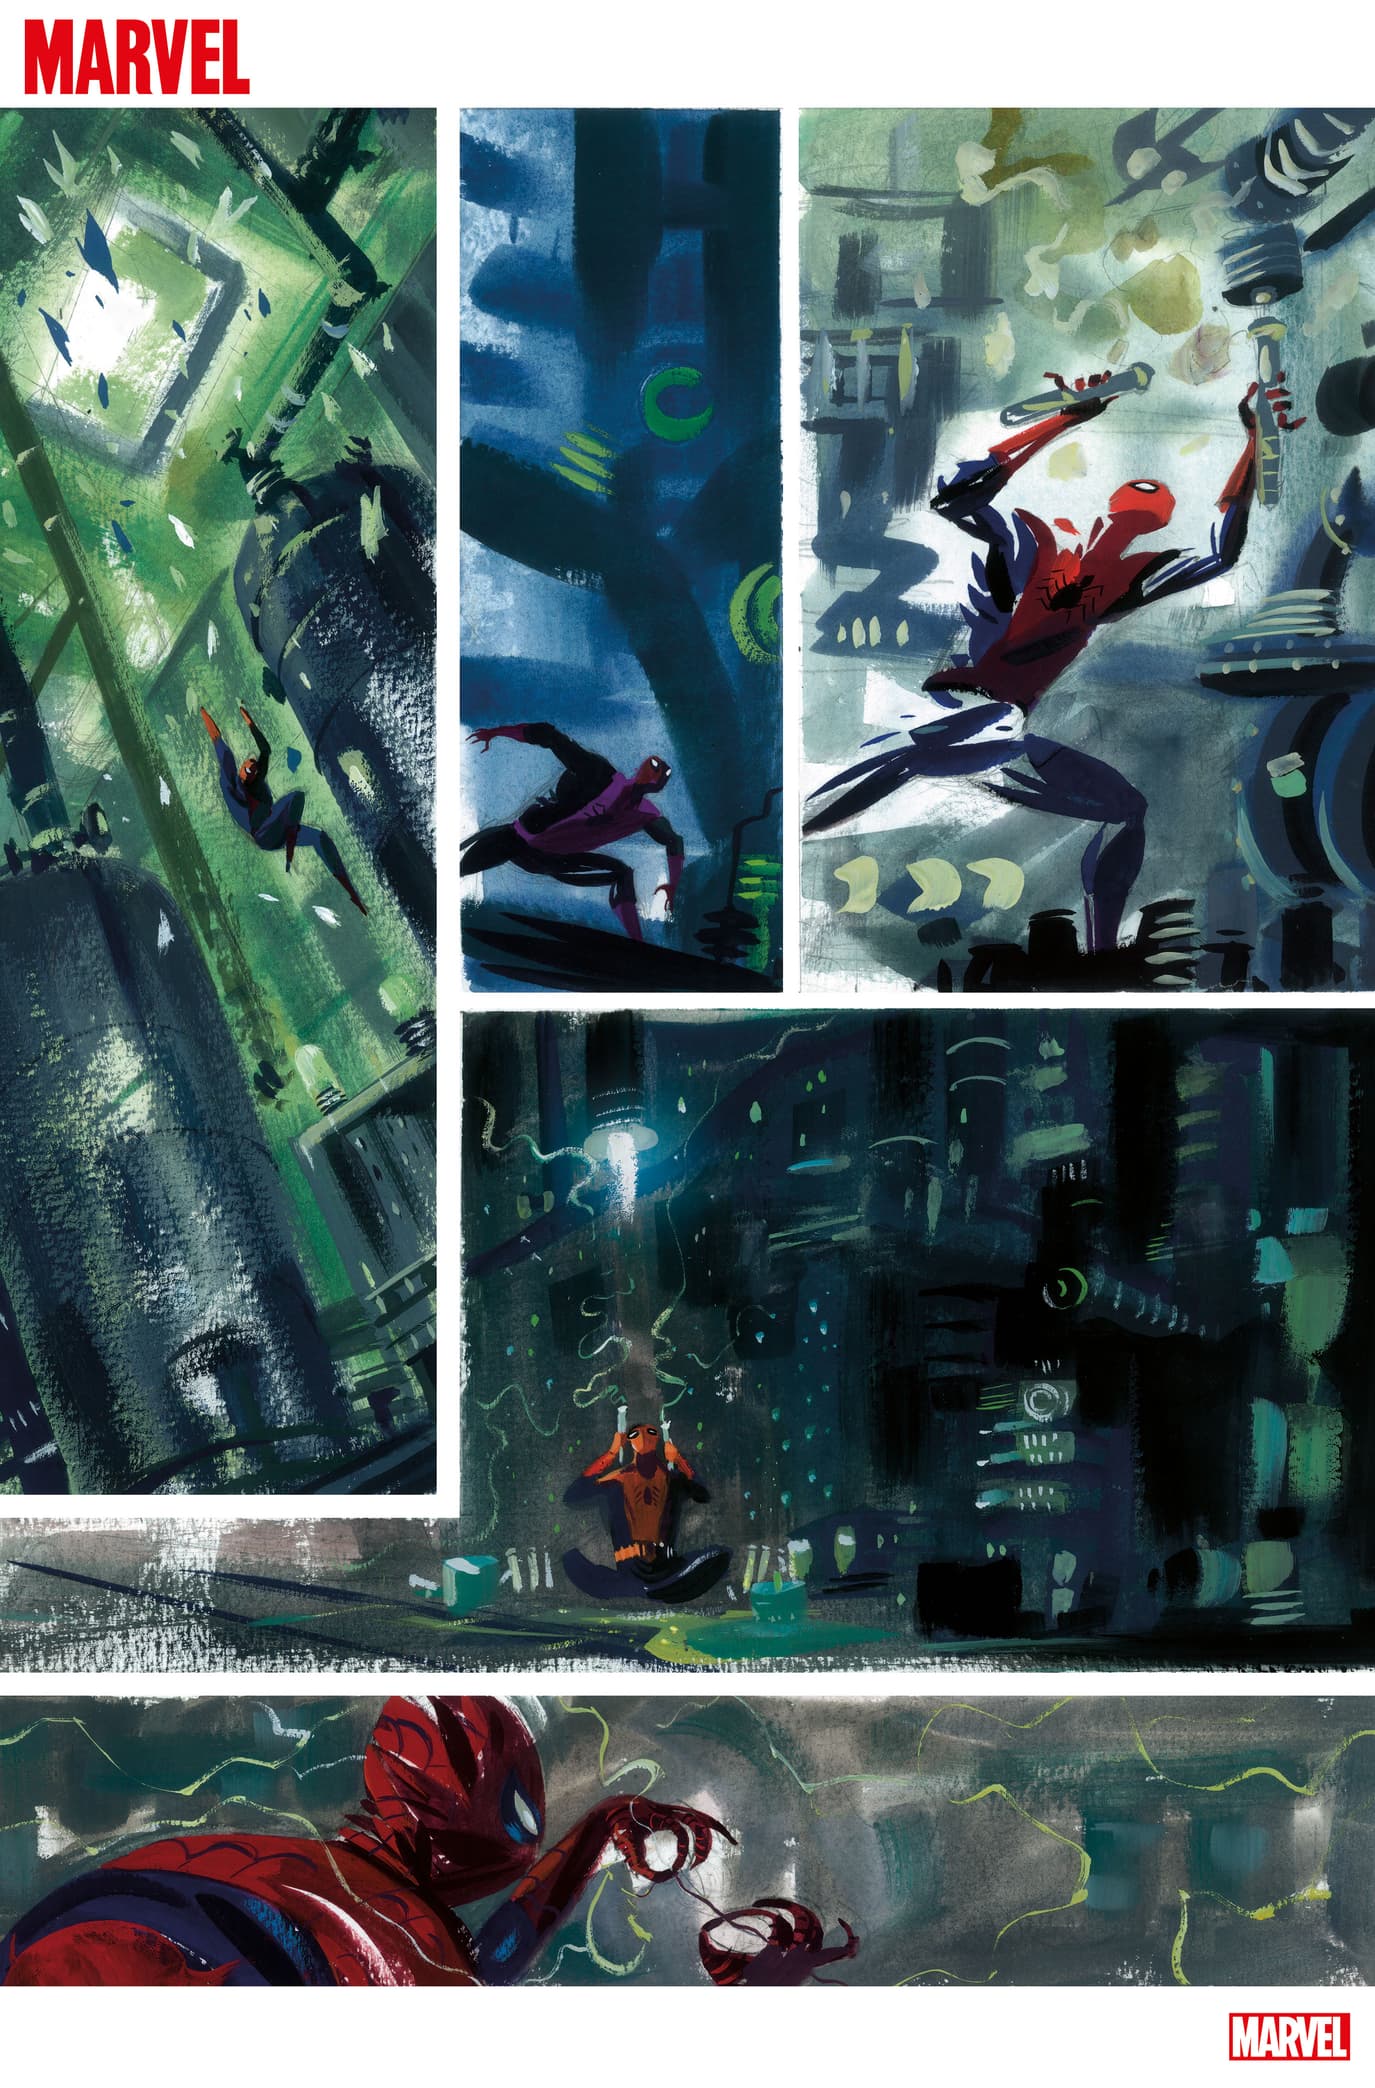 Marvel #1 Spider-Man story